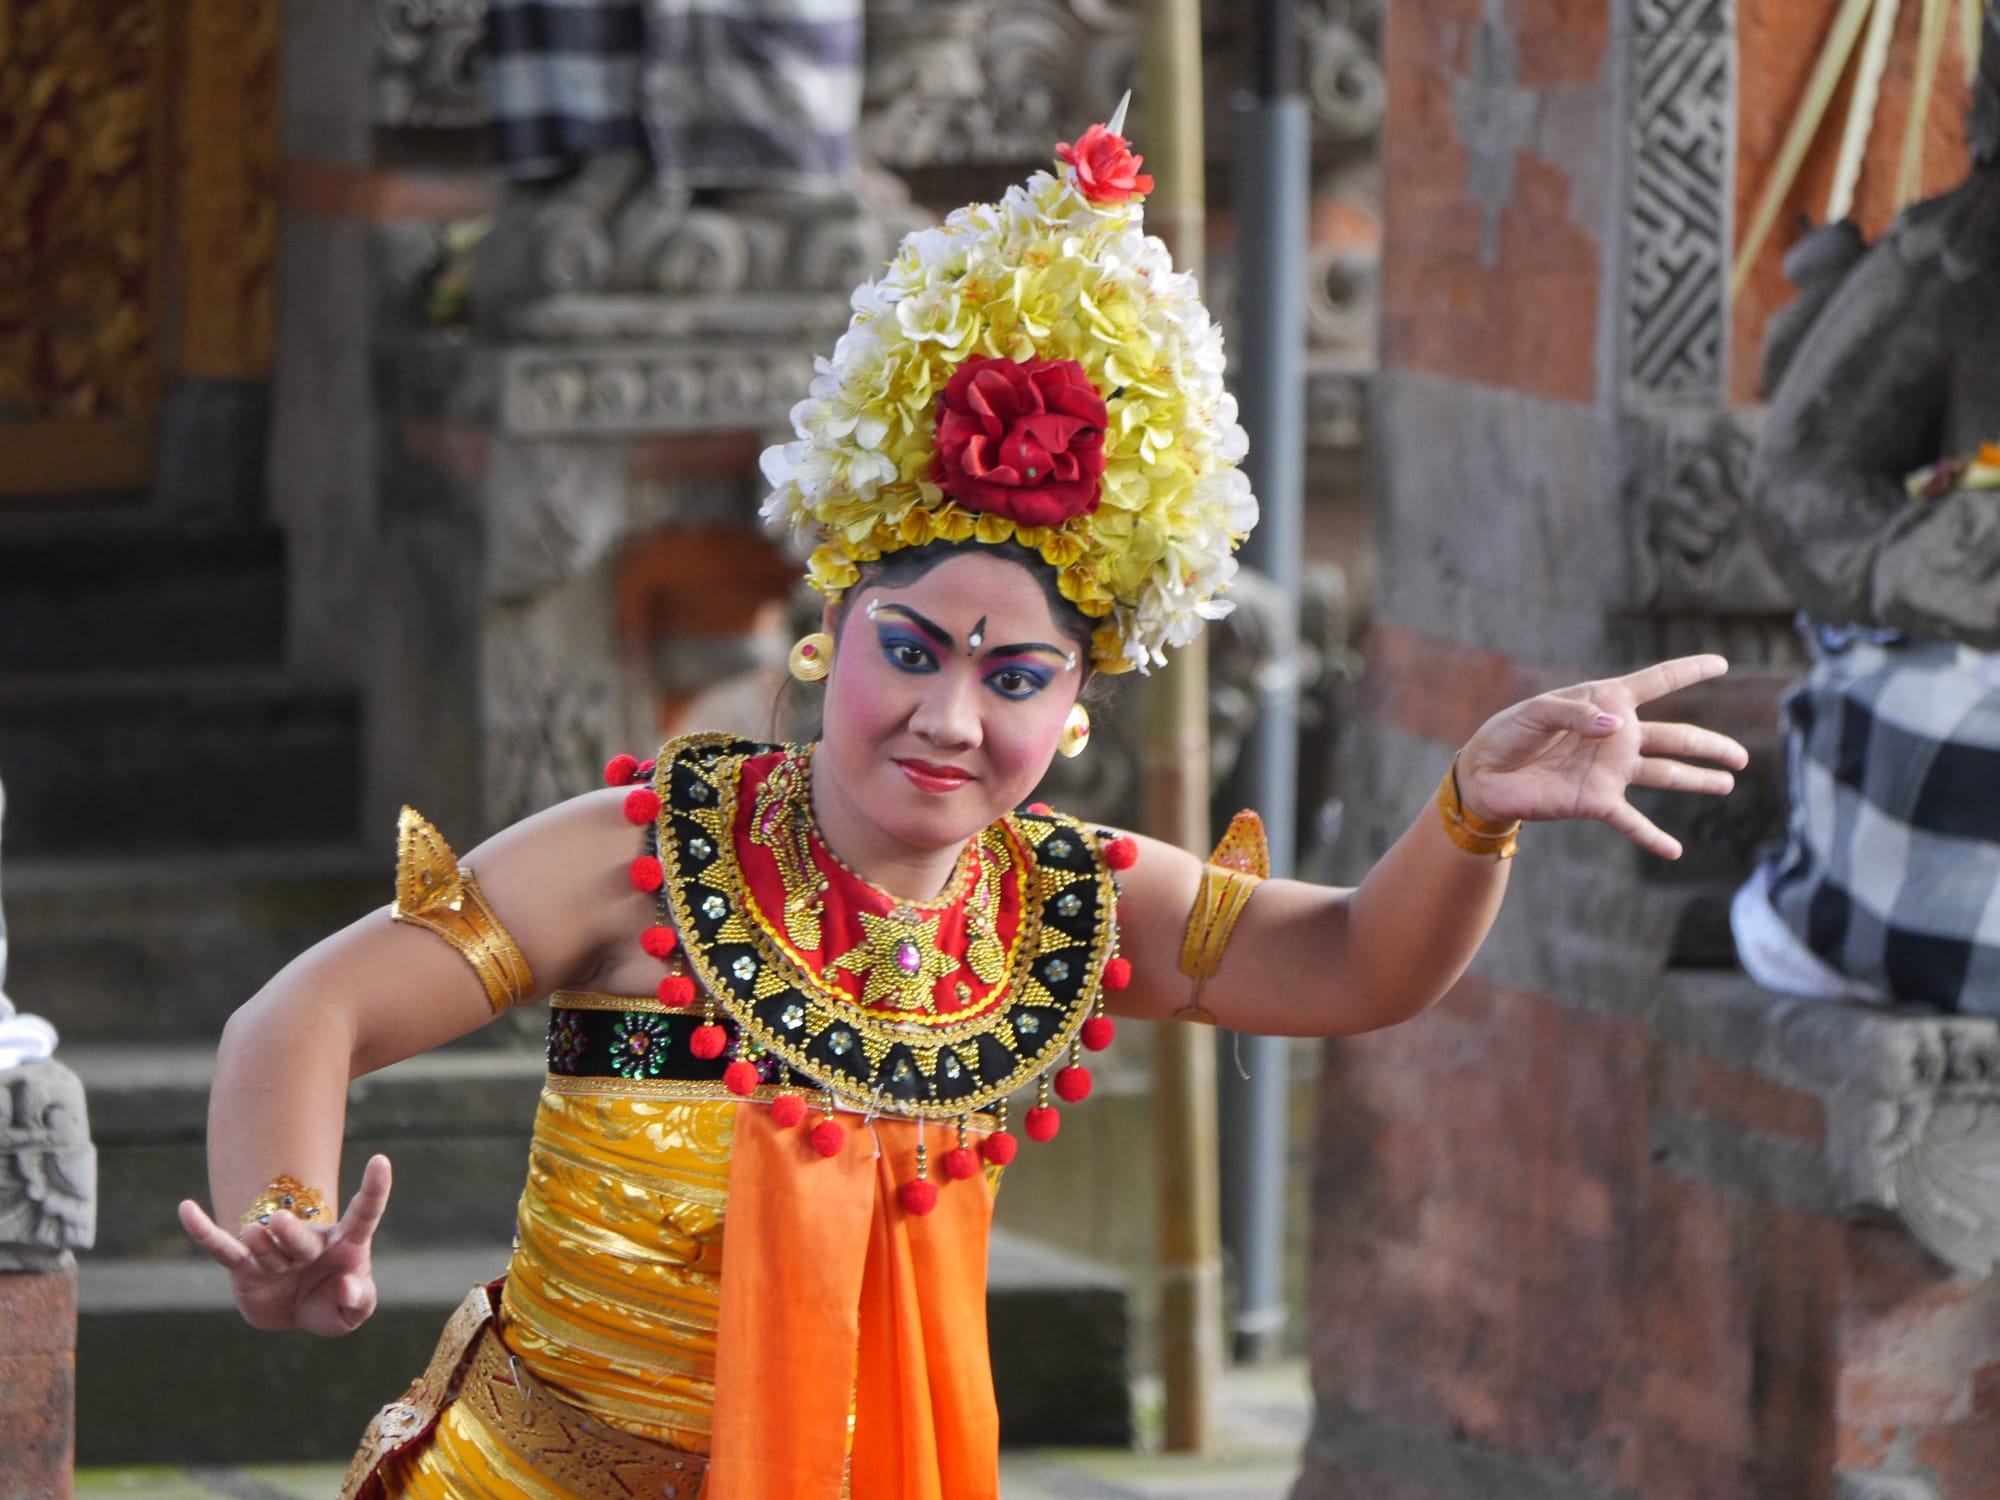 Photo by Author — servant of Rangda — Sahadewa Barong and Kris Dance, Bali, Indonesia